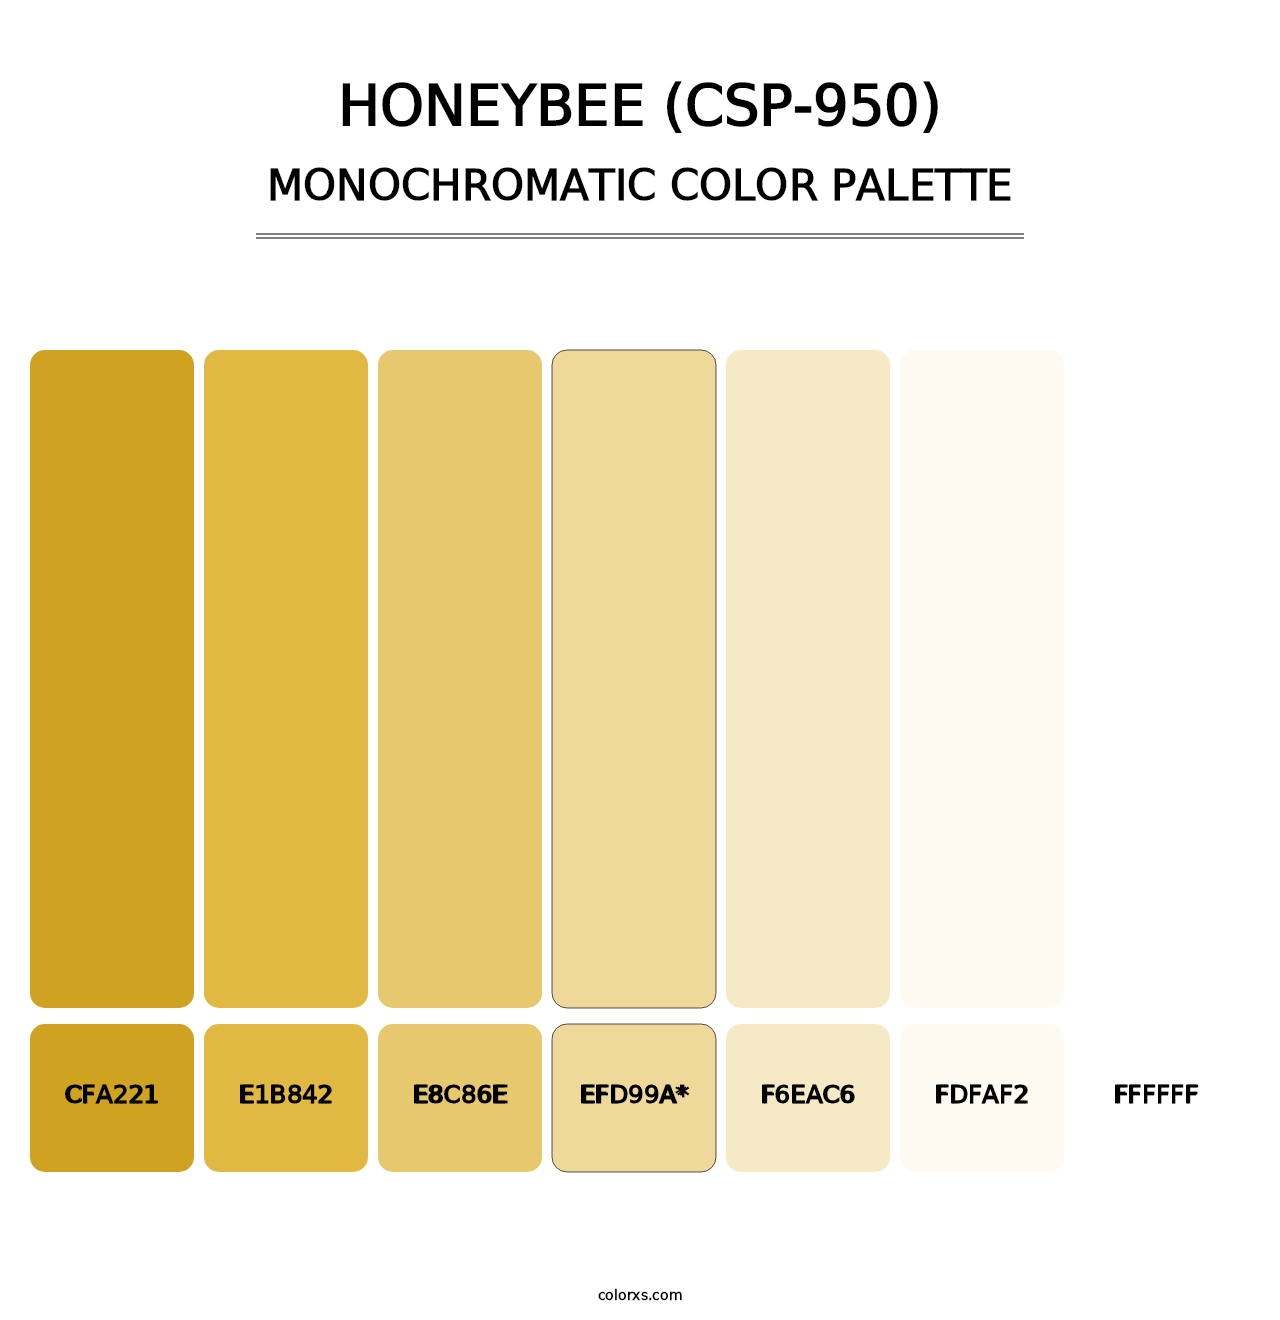 Honeybee (CSP-950) - Monochromatic Color Palette